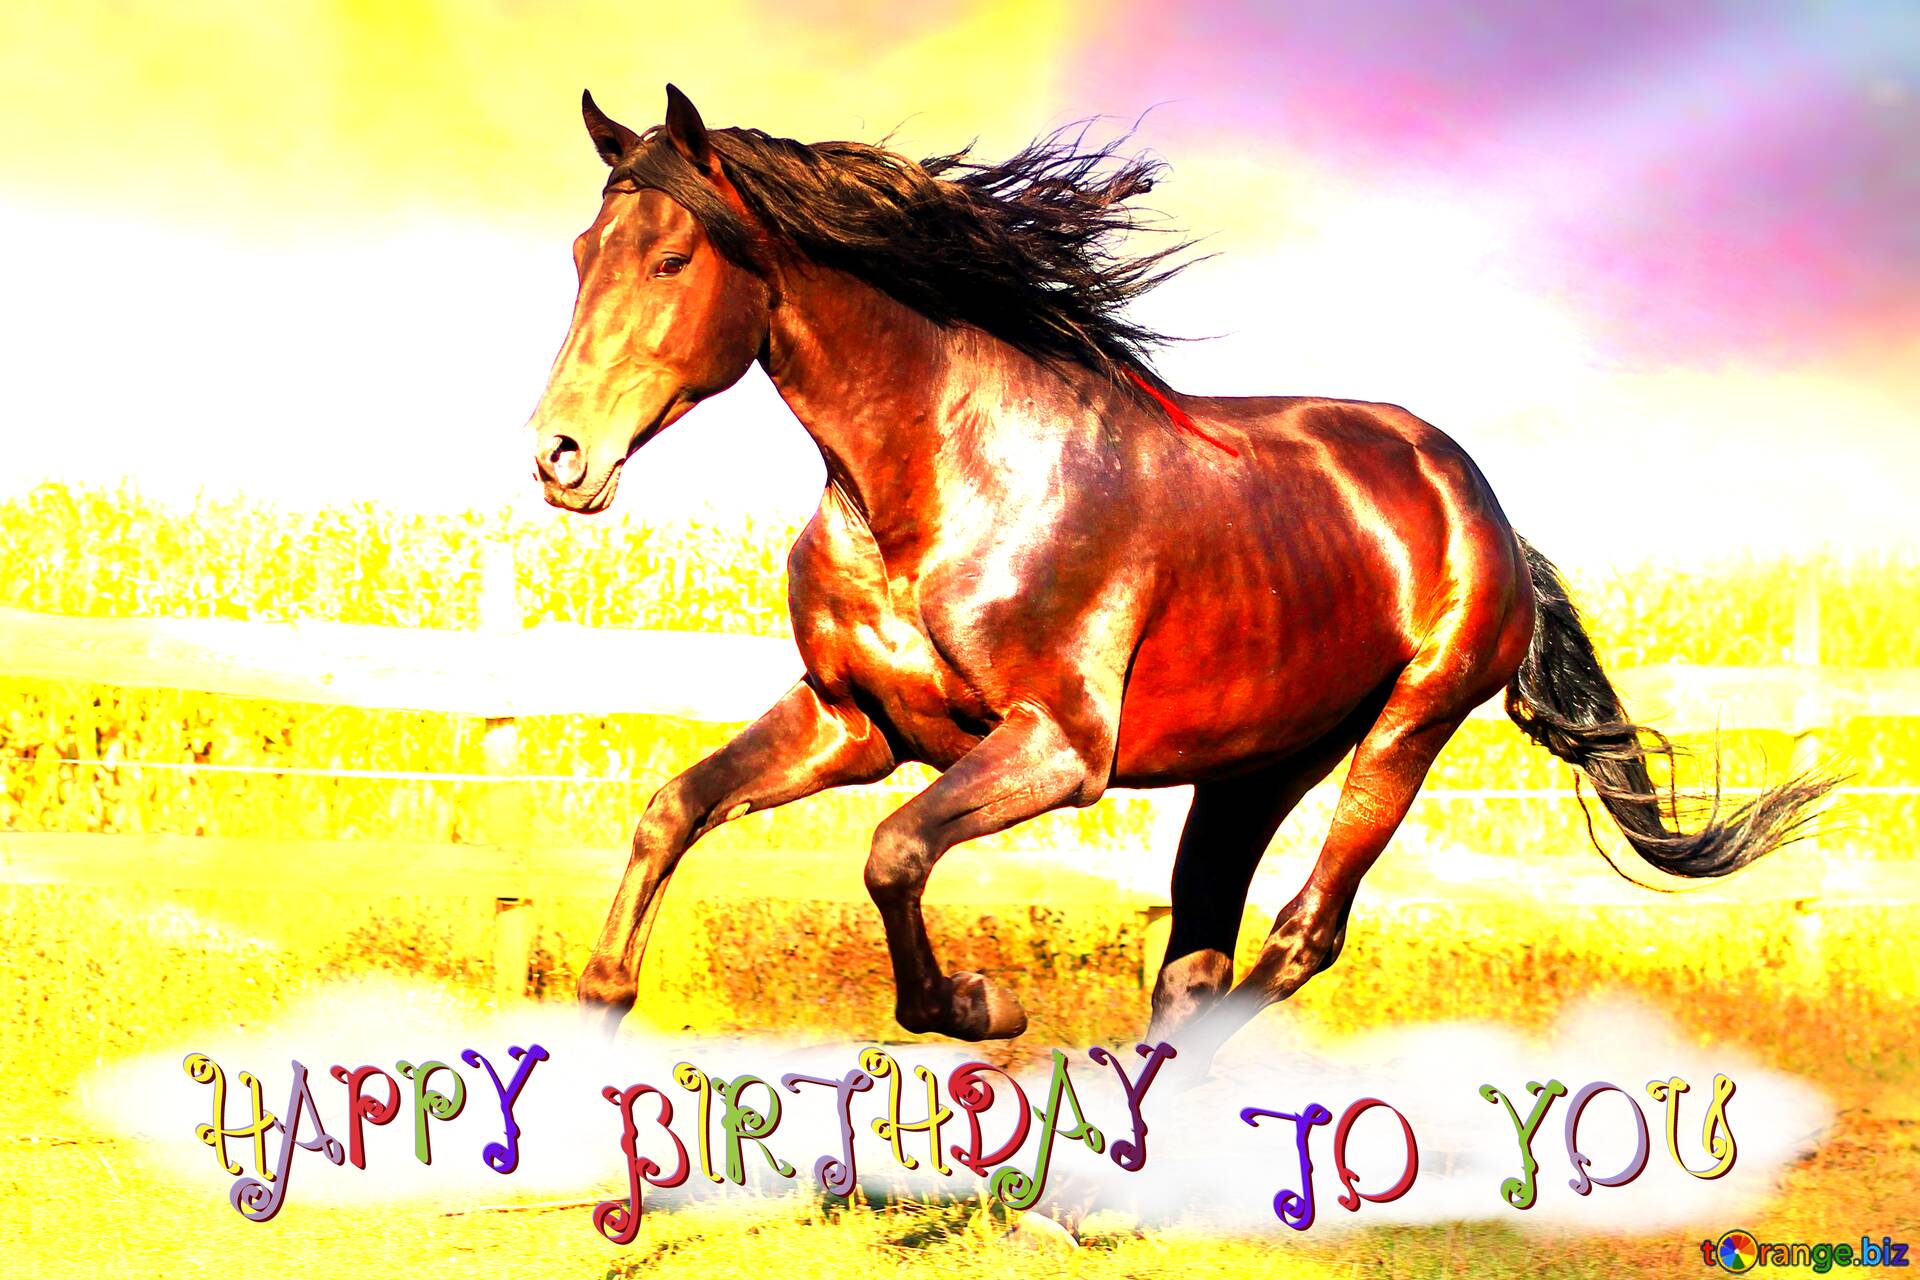 Download Free Picture Horse Birthday Card Happy Birthday On Cc By License Free Image Stock Torange Biz Fx 210572